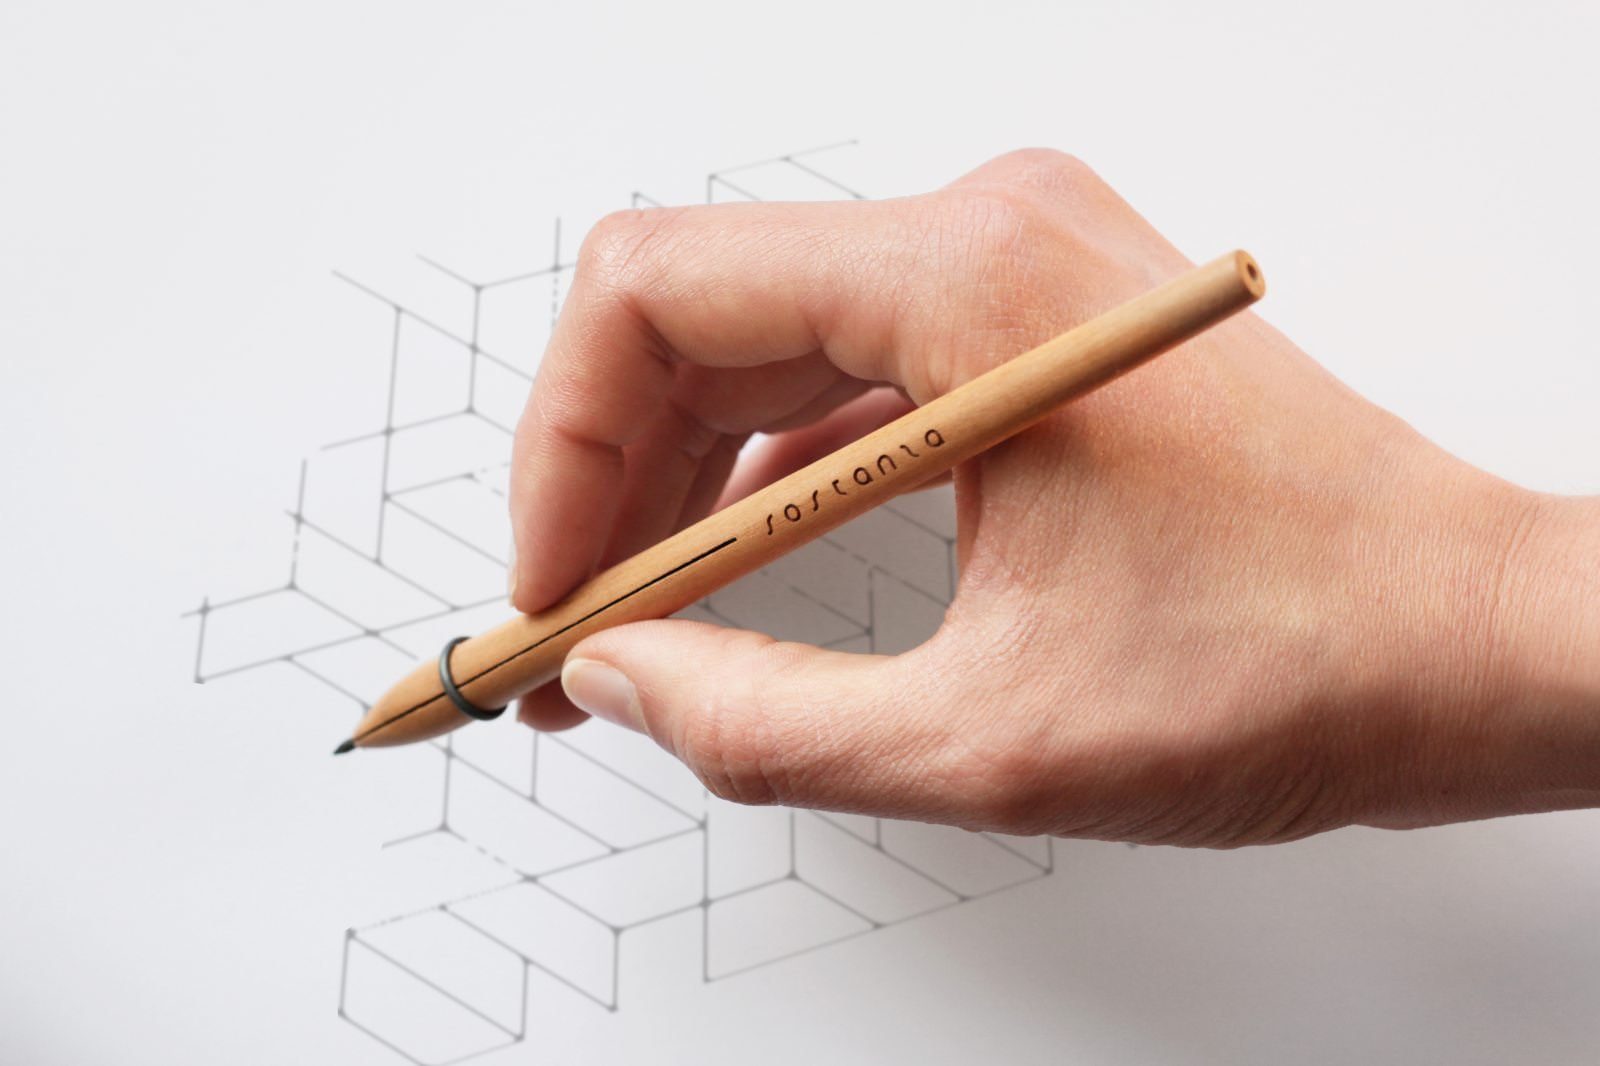 Sostanza Edelholz aus (kein Pininfarina Bleistift Bleistift erneuerbare, Mahagoni Set) Stift Pencil